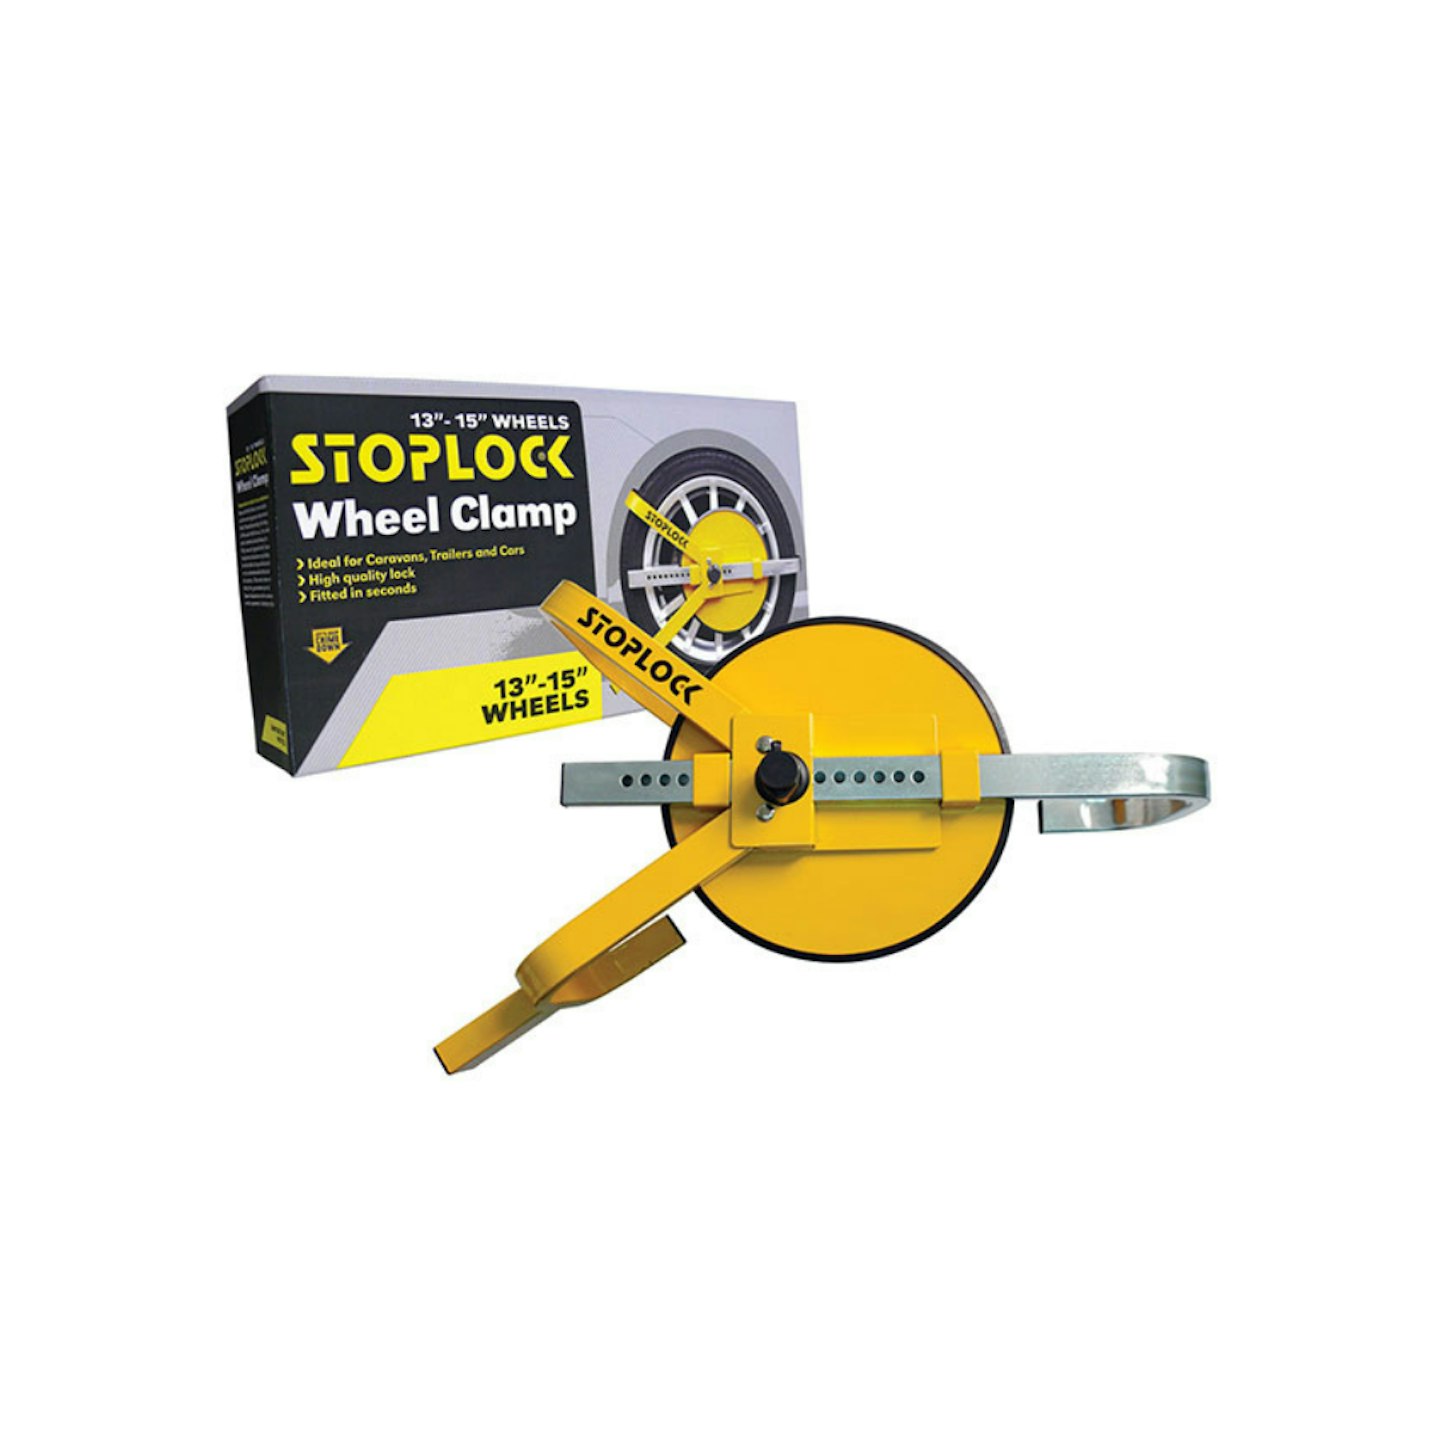 Stoplock wheel clamp